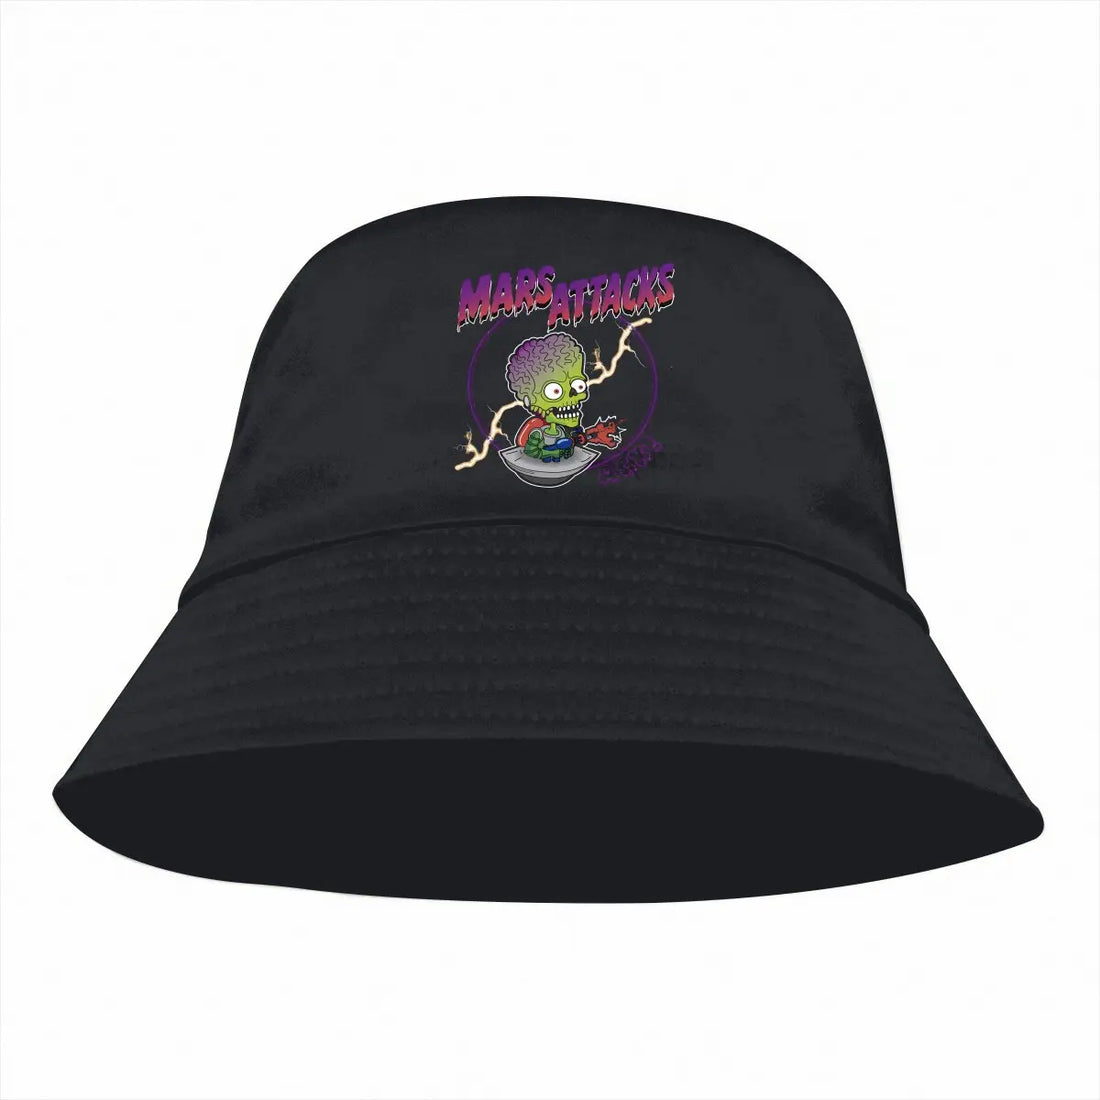 Alien Unisex Bucket Hats Mars Attacks Alien Sci-Fi Movies Hip Hop Fishing Sun Cap Fashion Style Designed